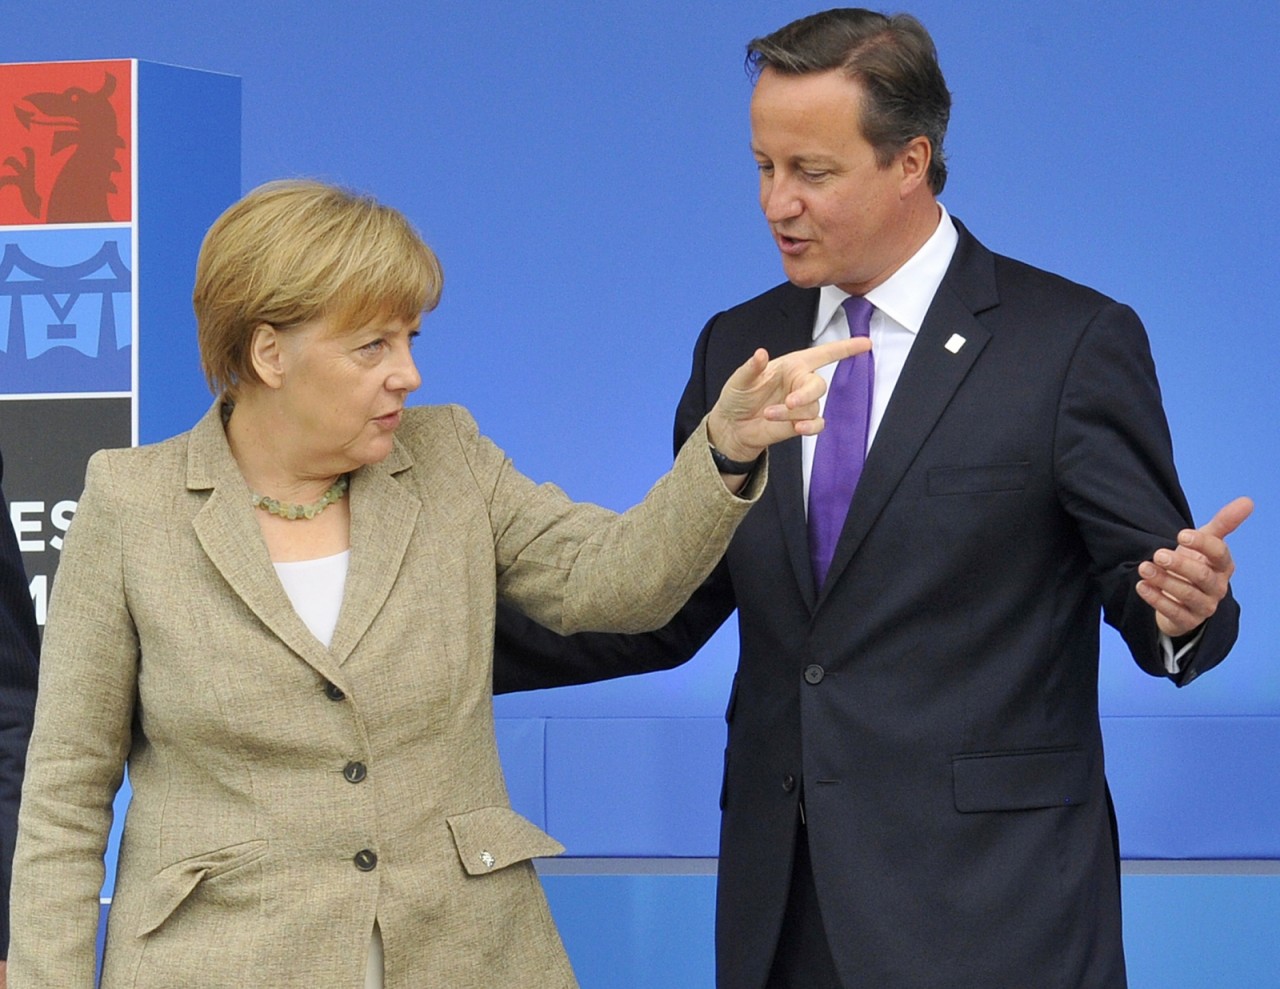 http://d.ibtimes.co.uk/en/full/1407591/britains-prime-minister-david-cameron-r-greets-german-chancellor-angela-merkel.jpg